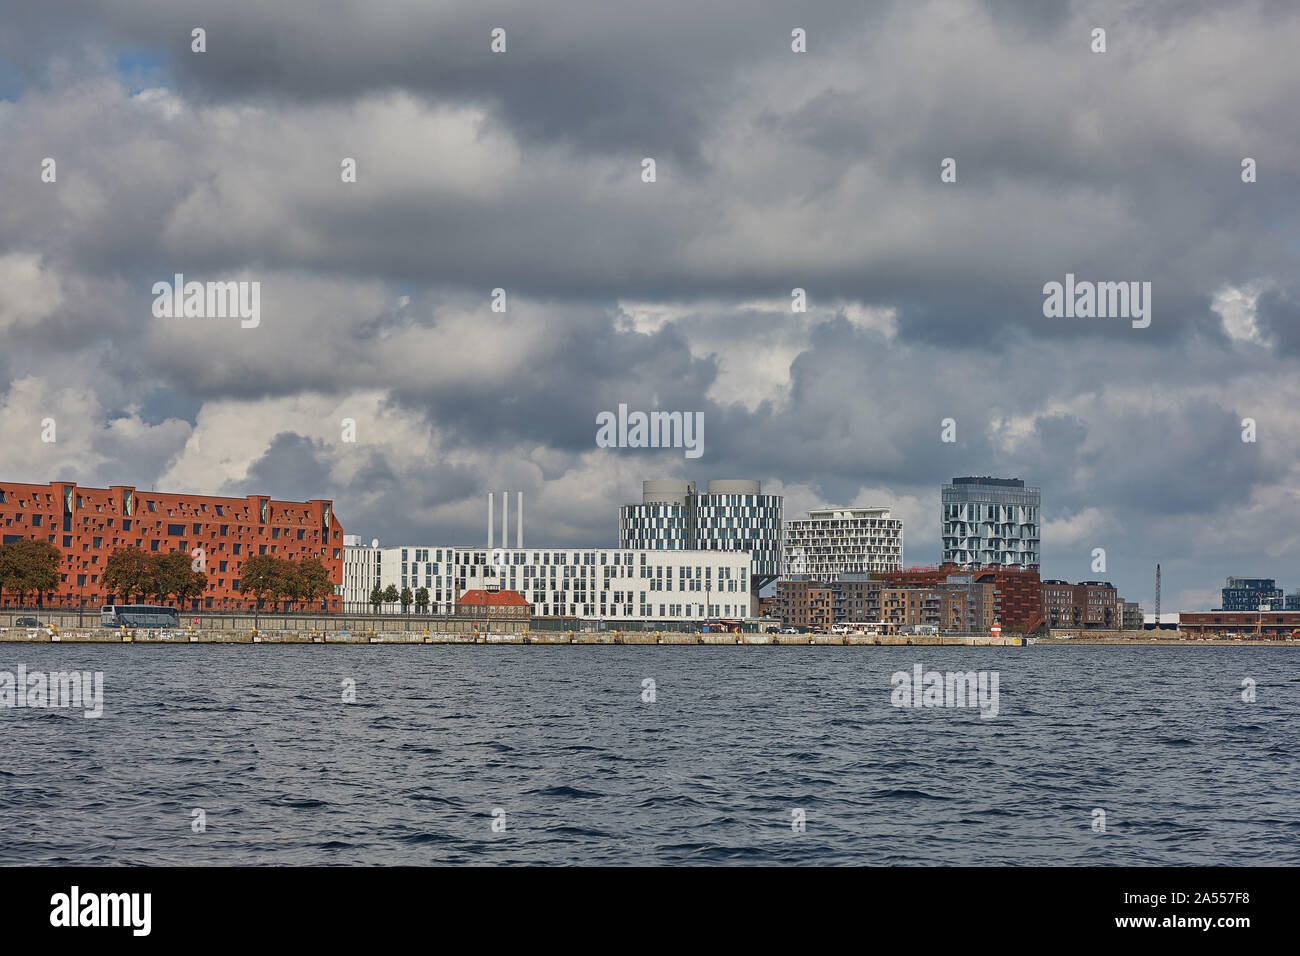 Kopenhagen, Dänemark - 16 September 2017: Blick auf die Stadt Kopenhagen in Dänemark bei bewölkten Tag. Stockfoto